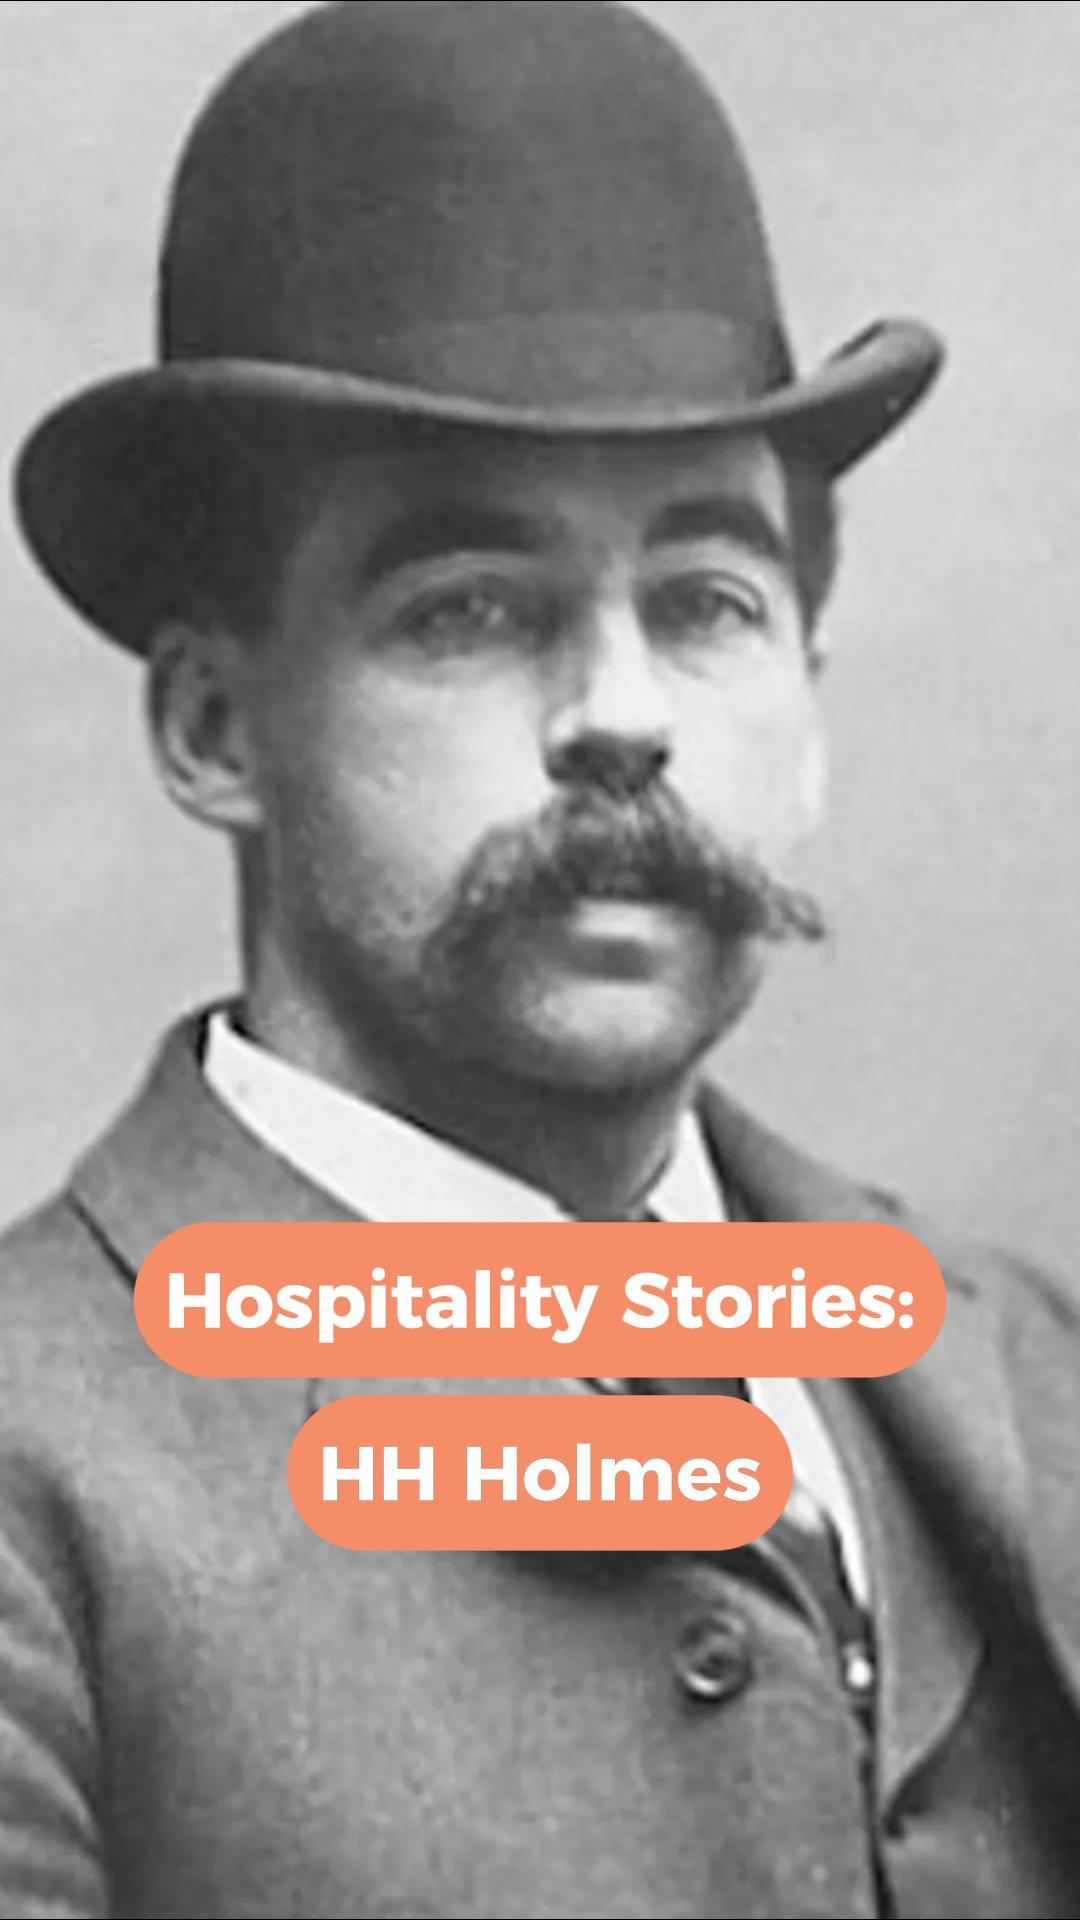 HH Holmes